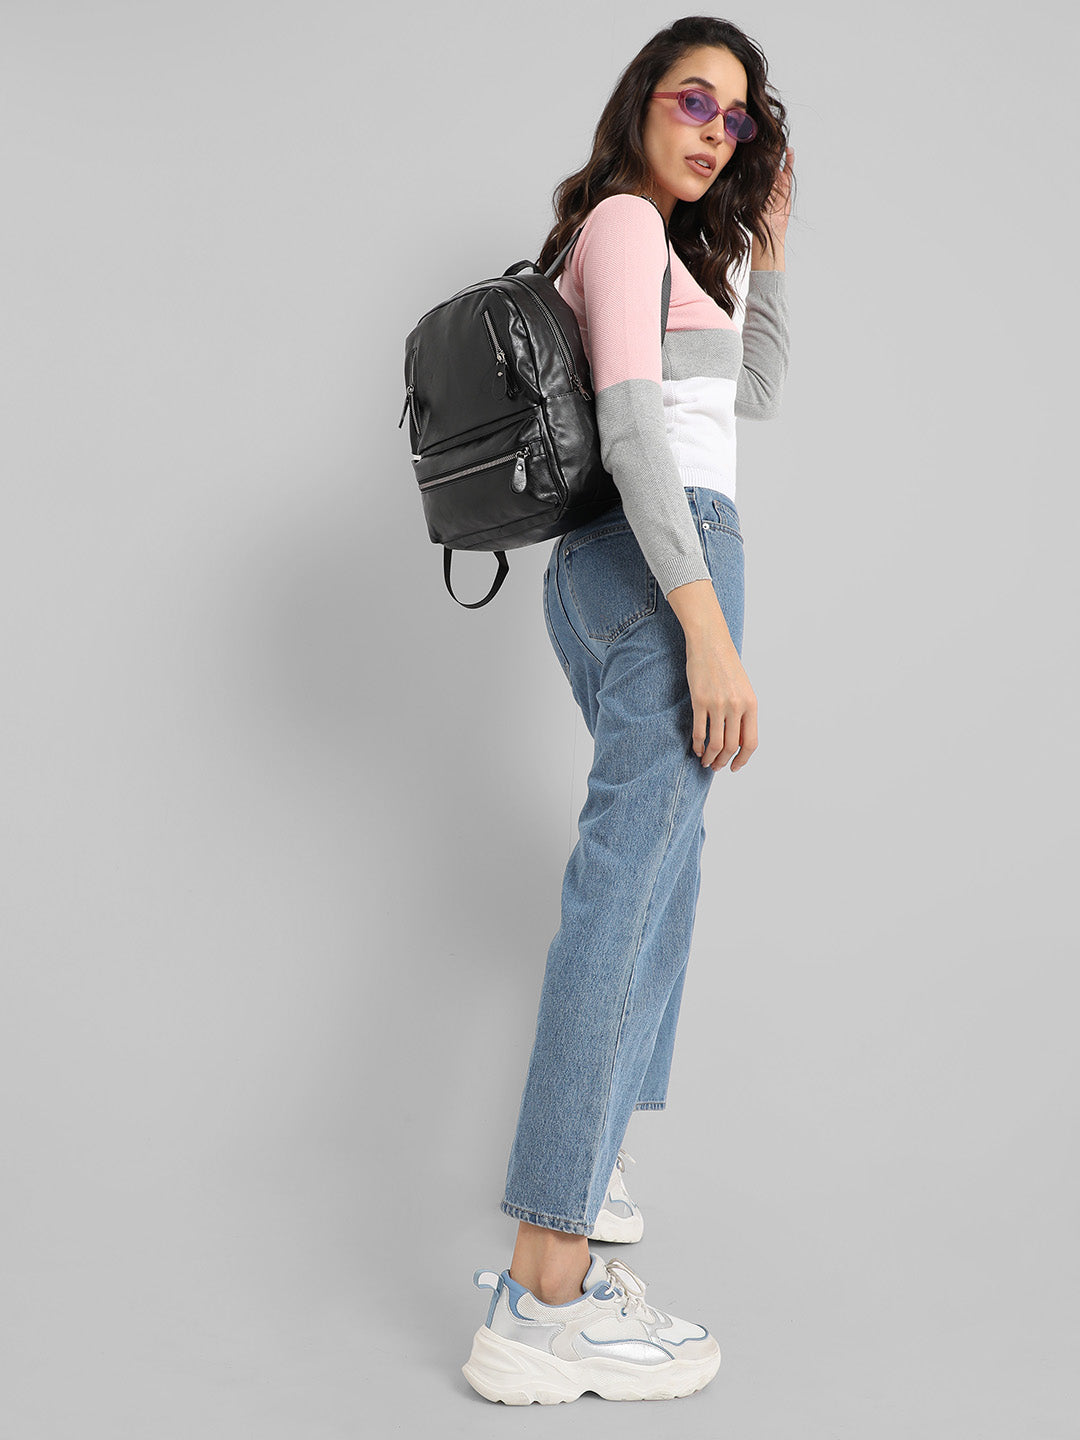 The Daily Mini Backpack - Black